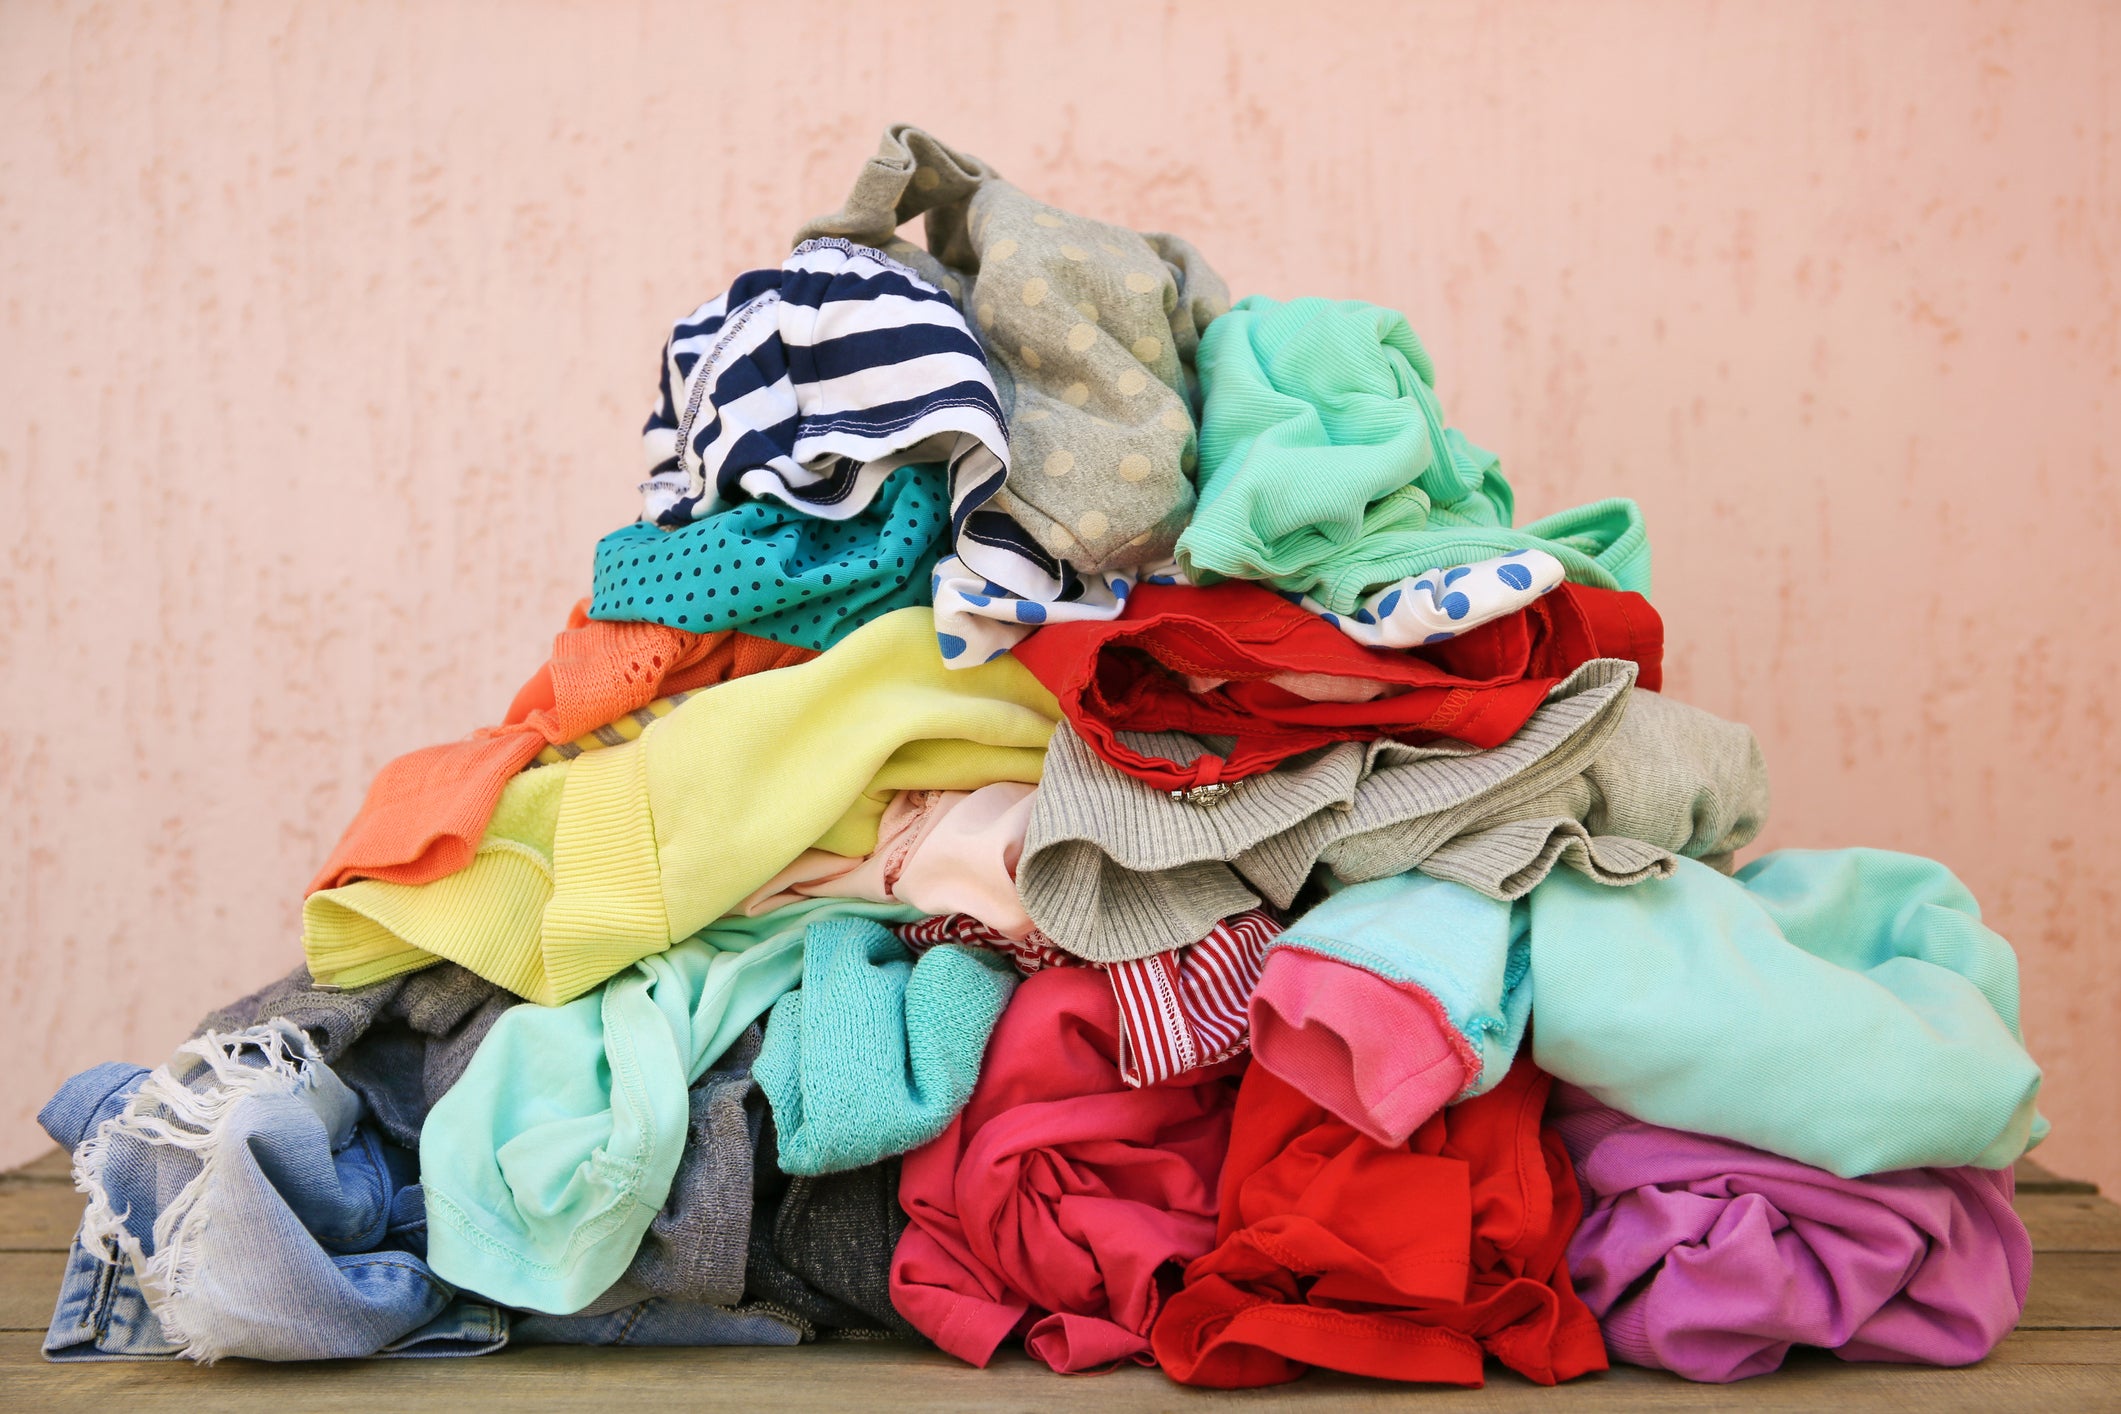 Recycled Polyester & Polyamide Fabrics, Buy Sustainable — Fabric Sight